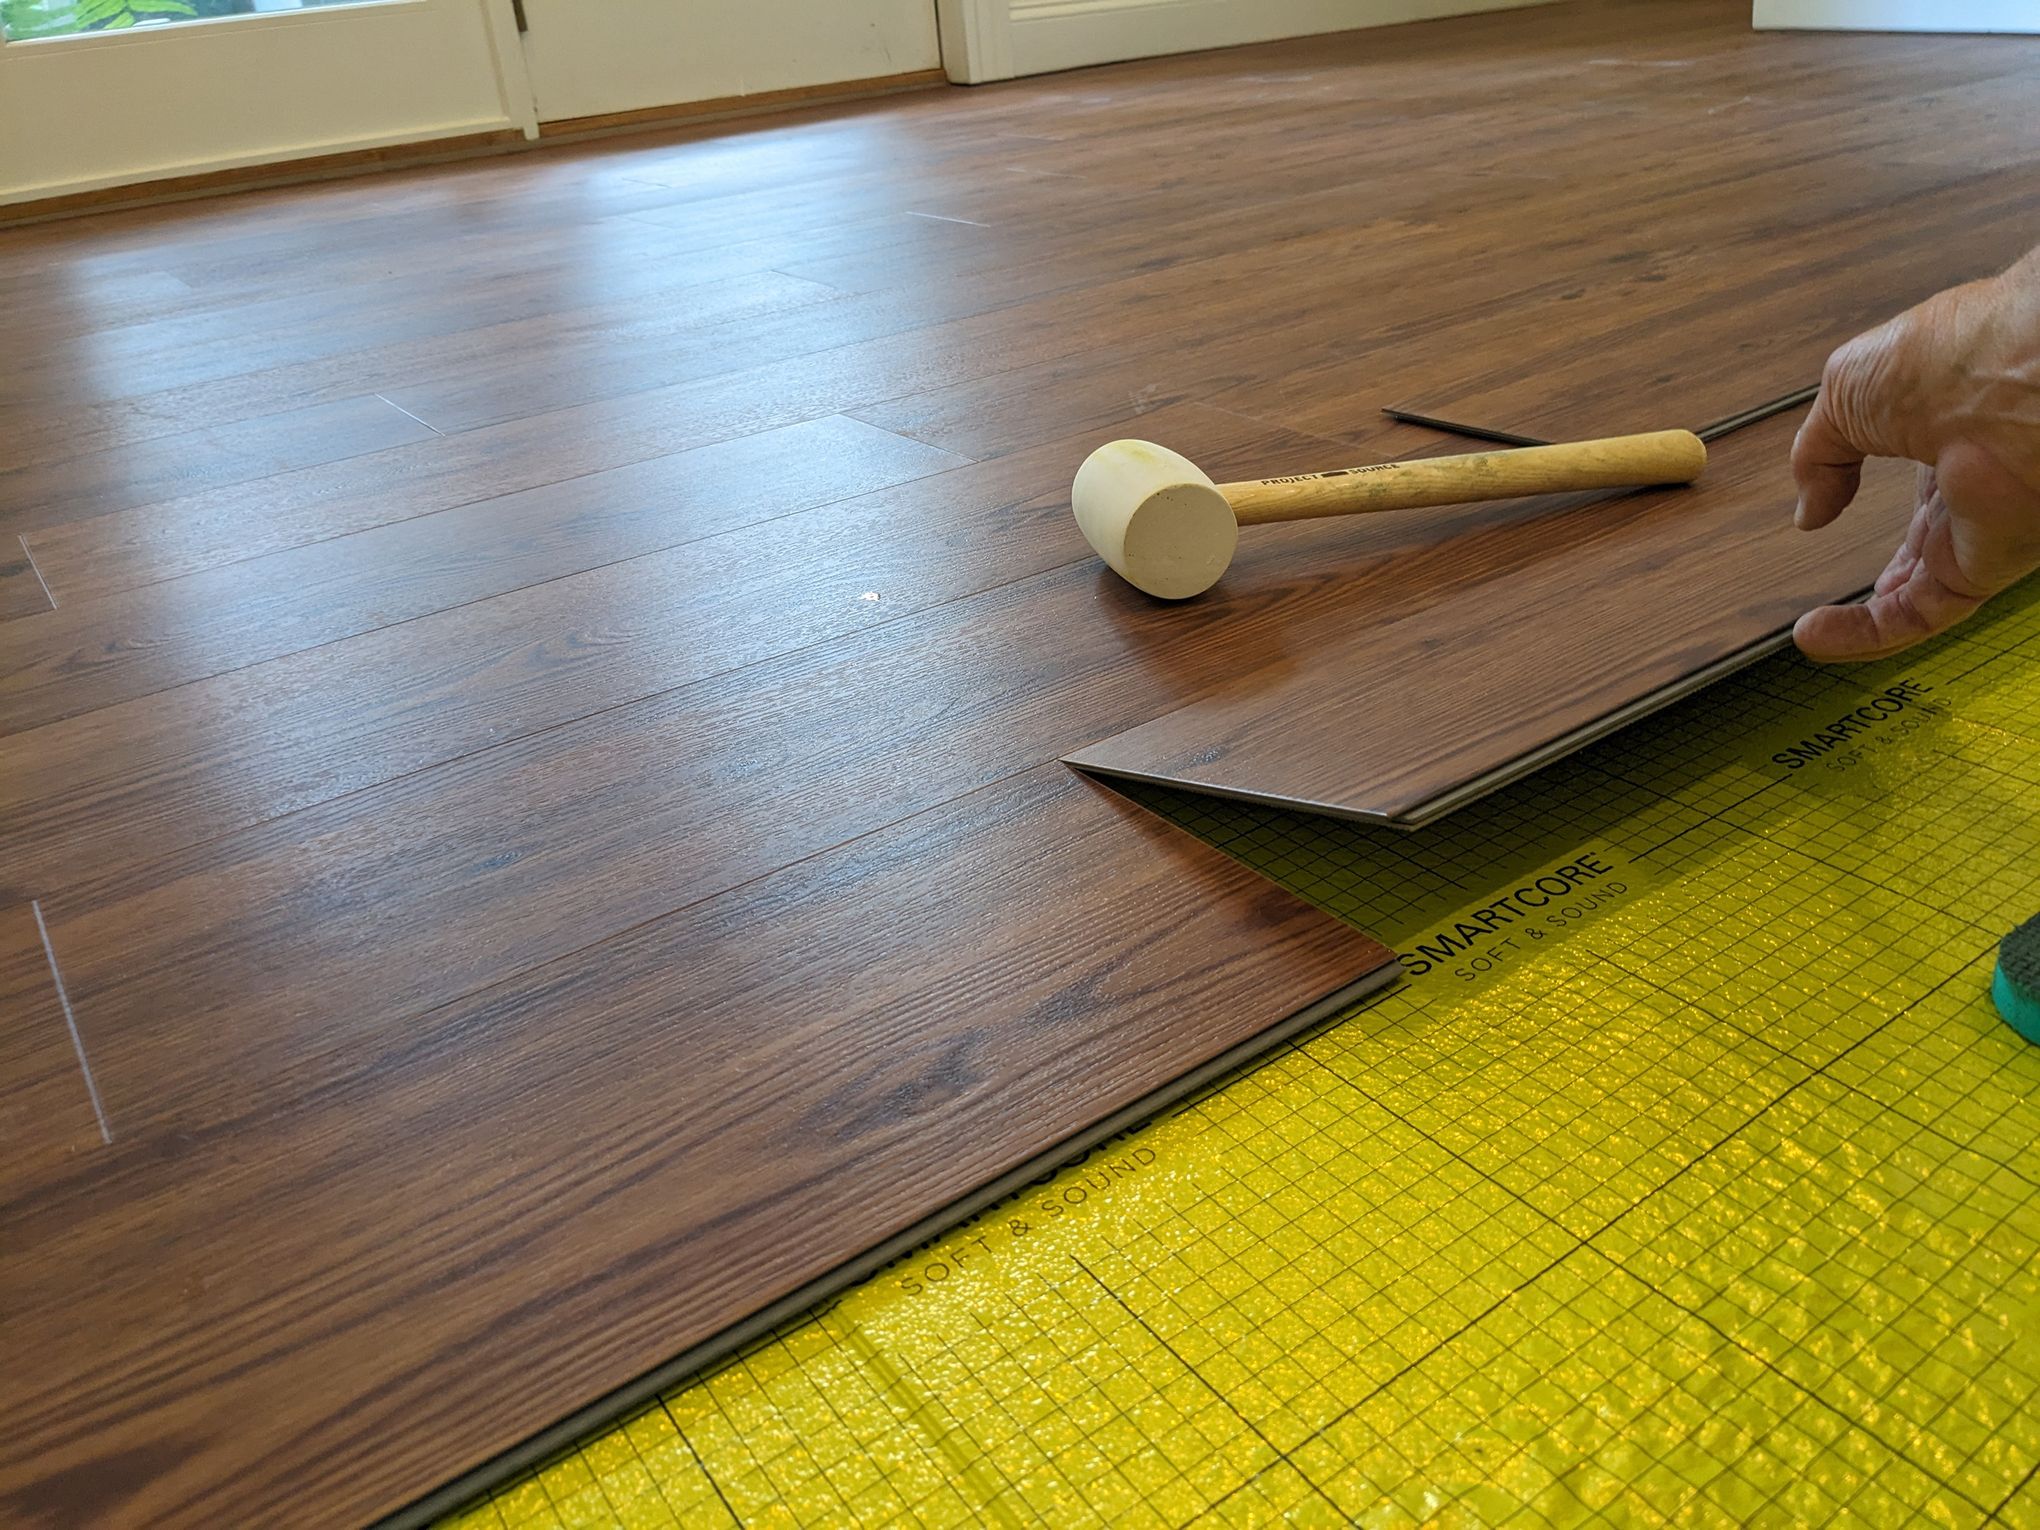 How to Clean Luxury Vinyl Plank (LVP) Flooring